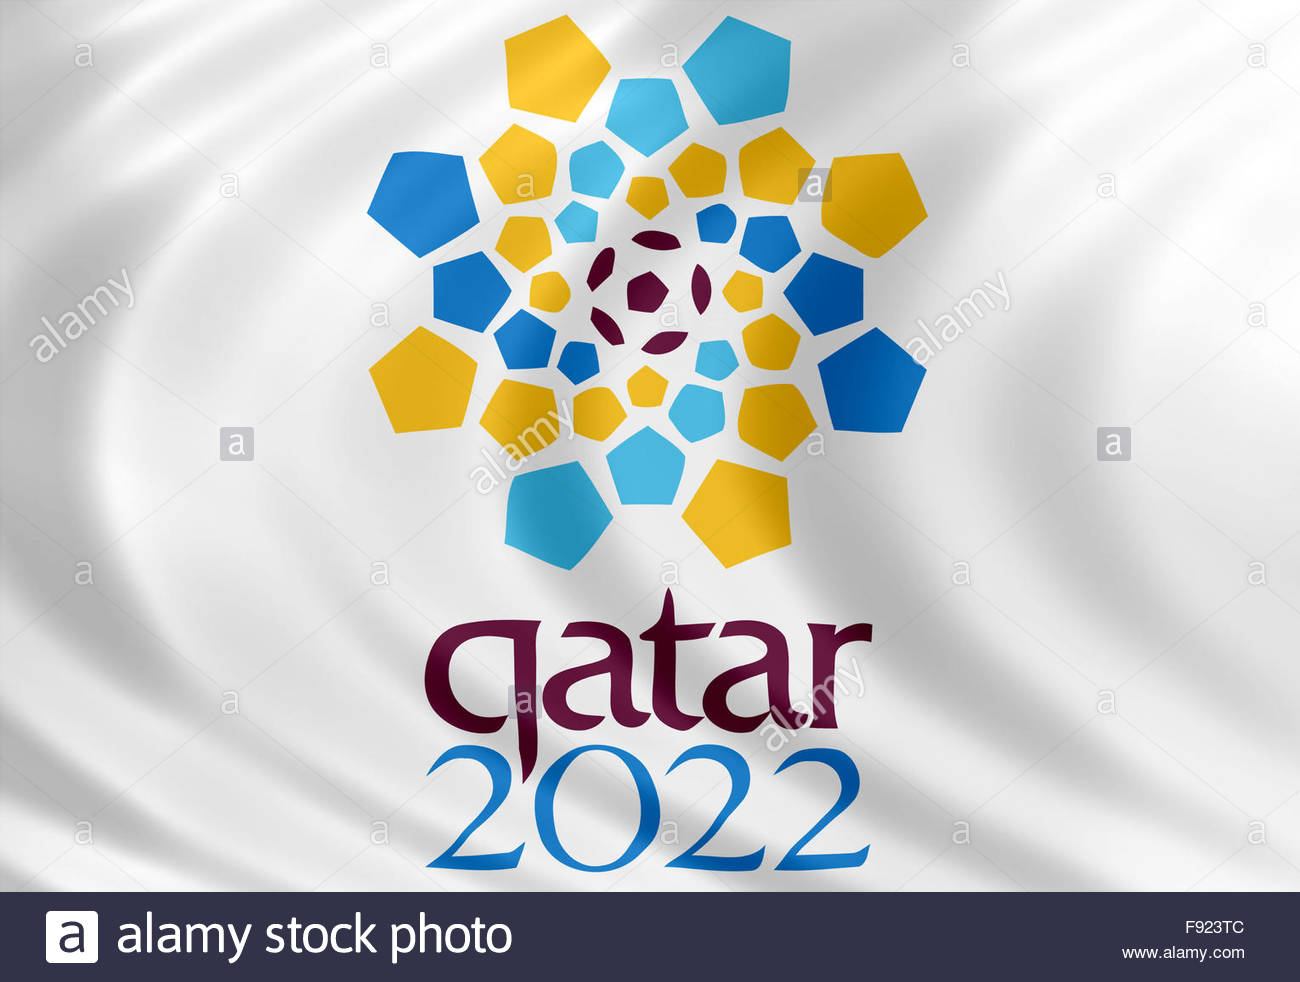 Qatar FIFA World Cup 2022 logo icon flag Stock Photo ...